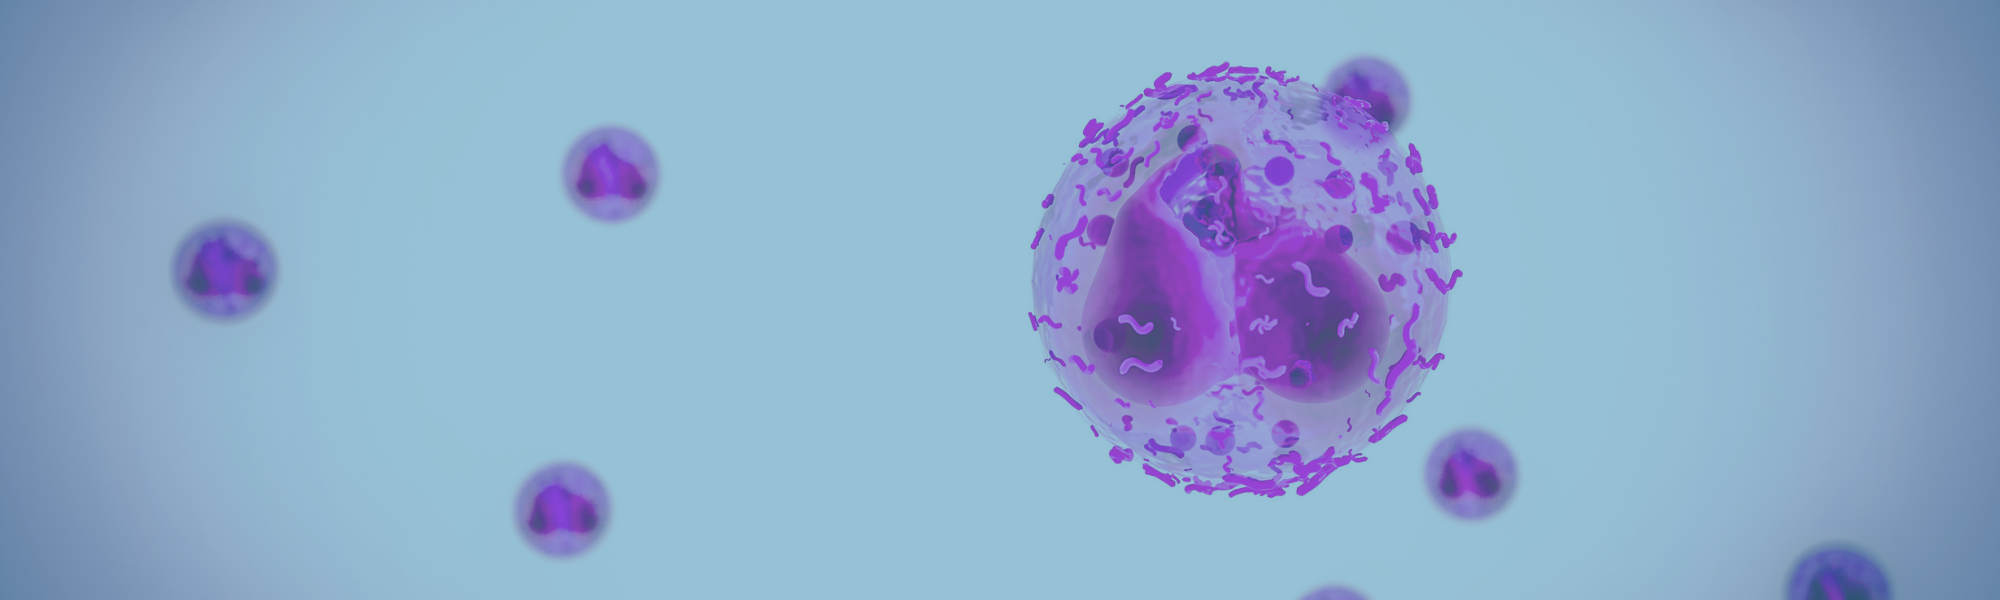 Image illustrating immune system fighting pathogen in inflammation